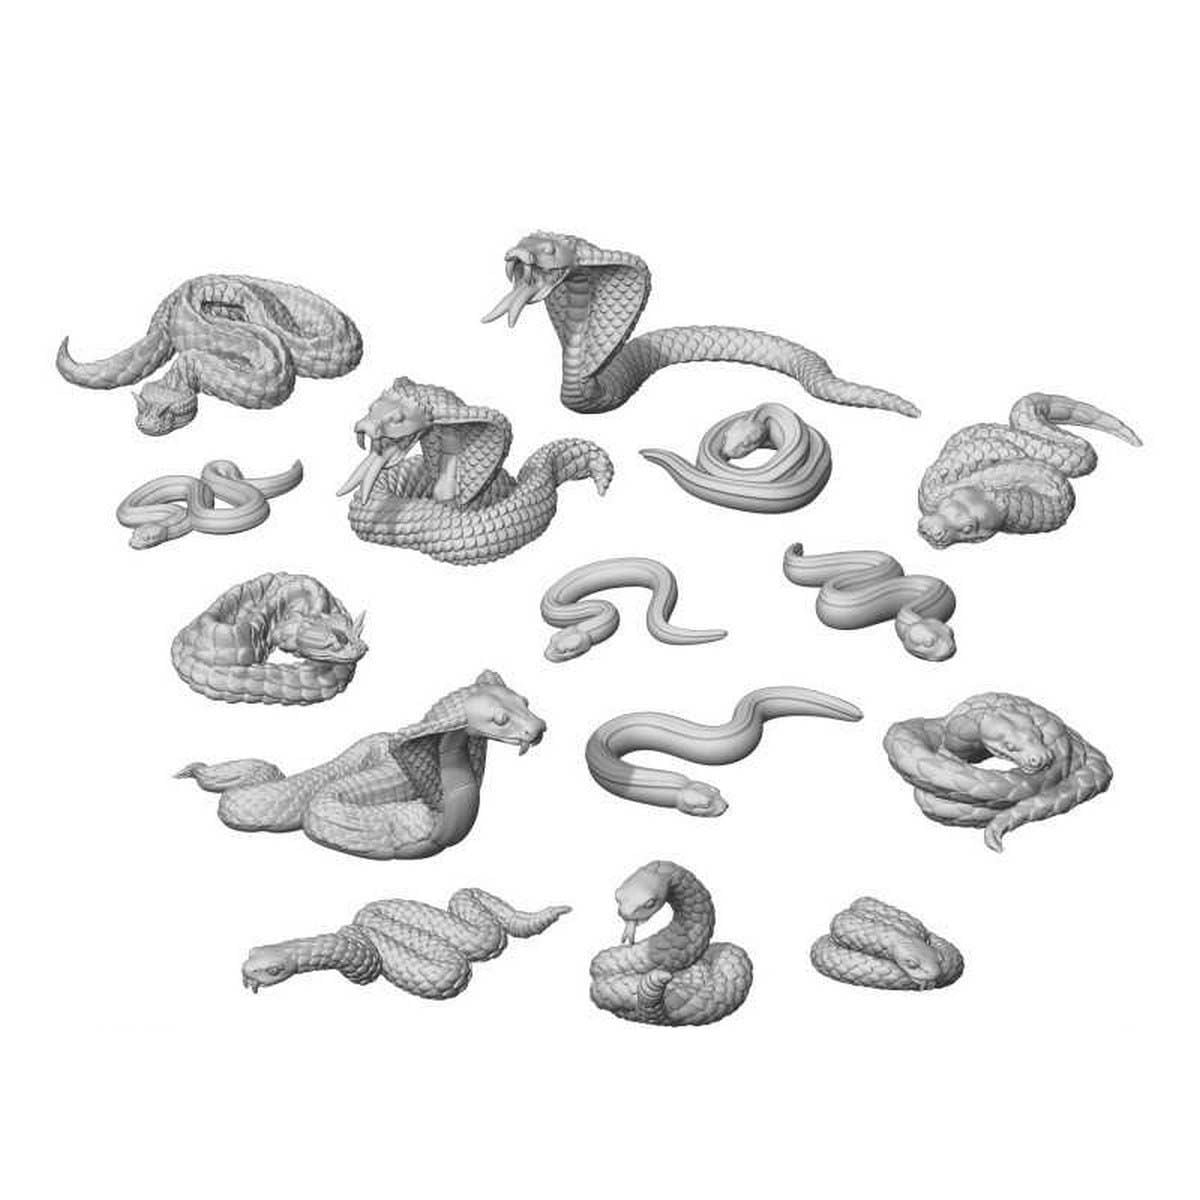 3D Printed Set - Snakes